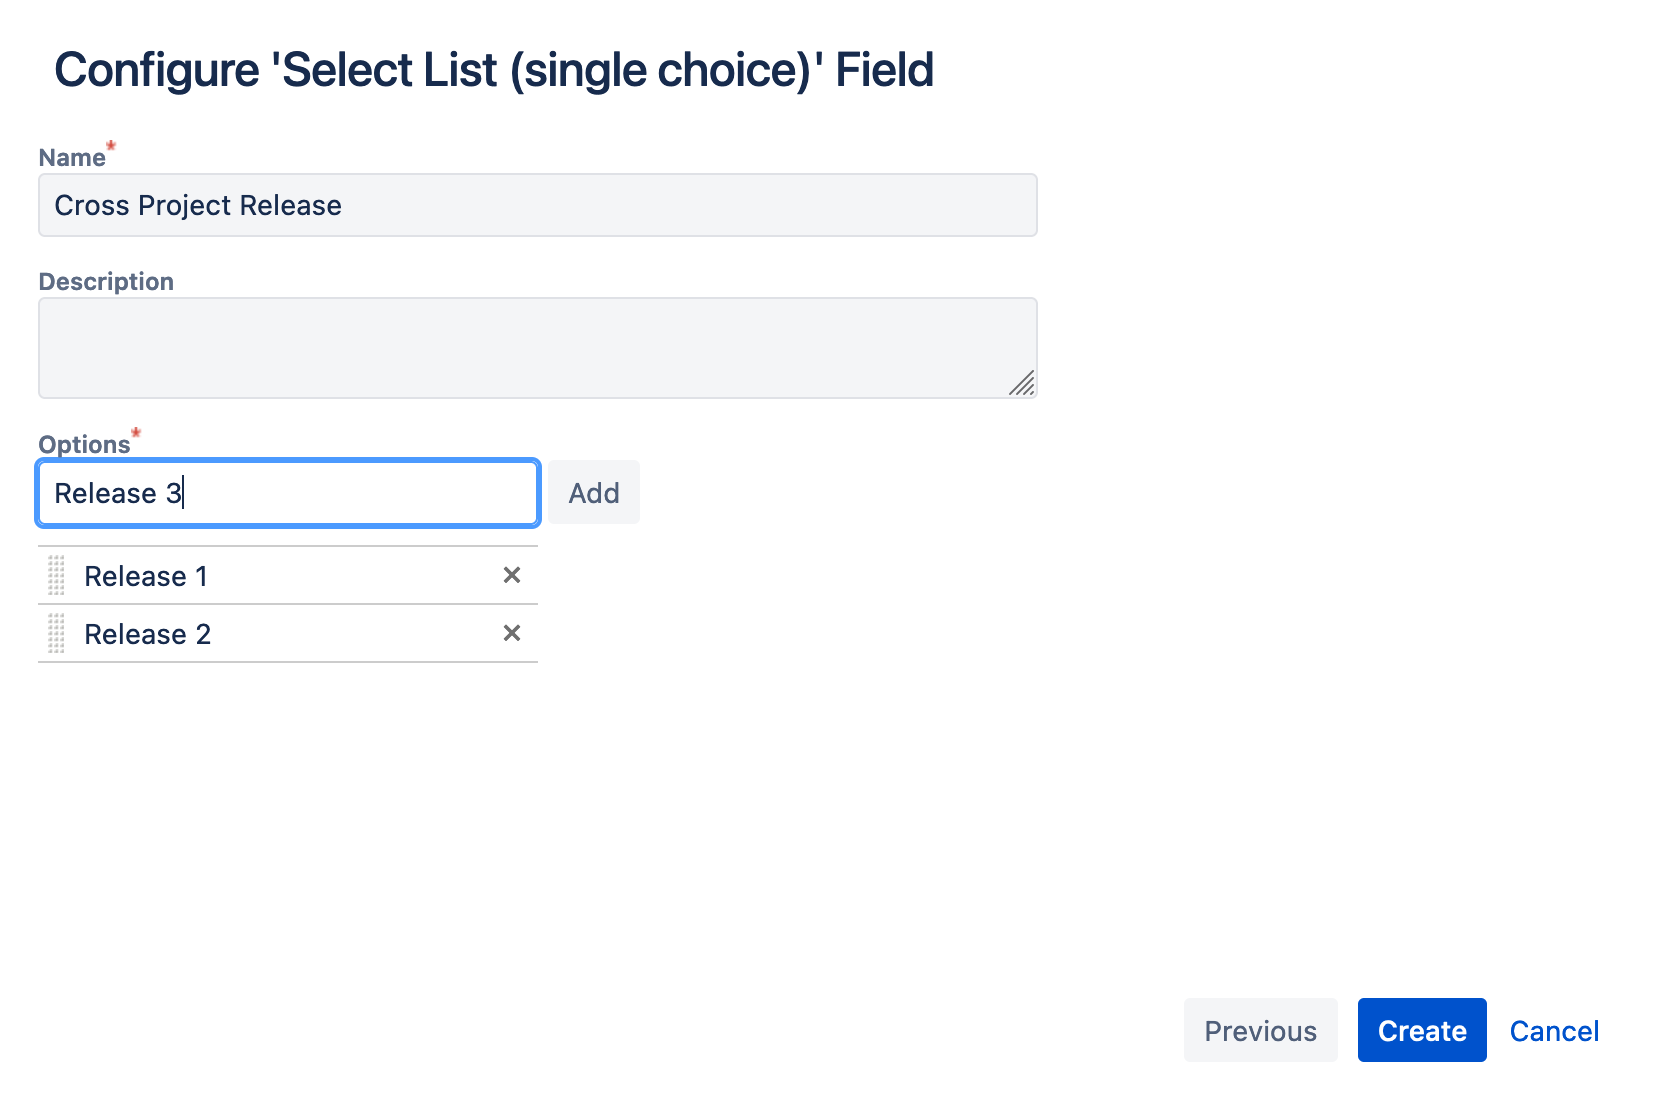 Adding options to the custom field